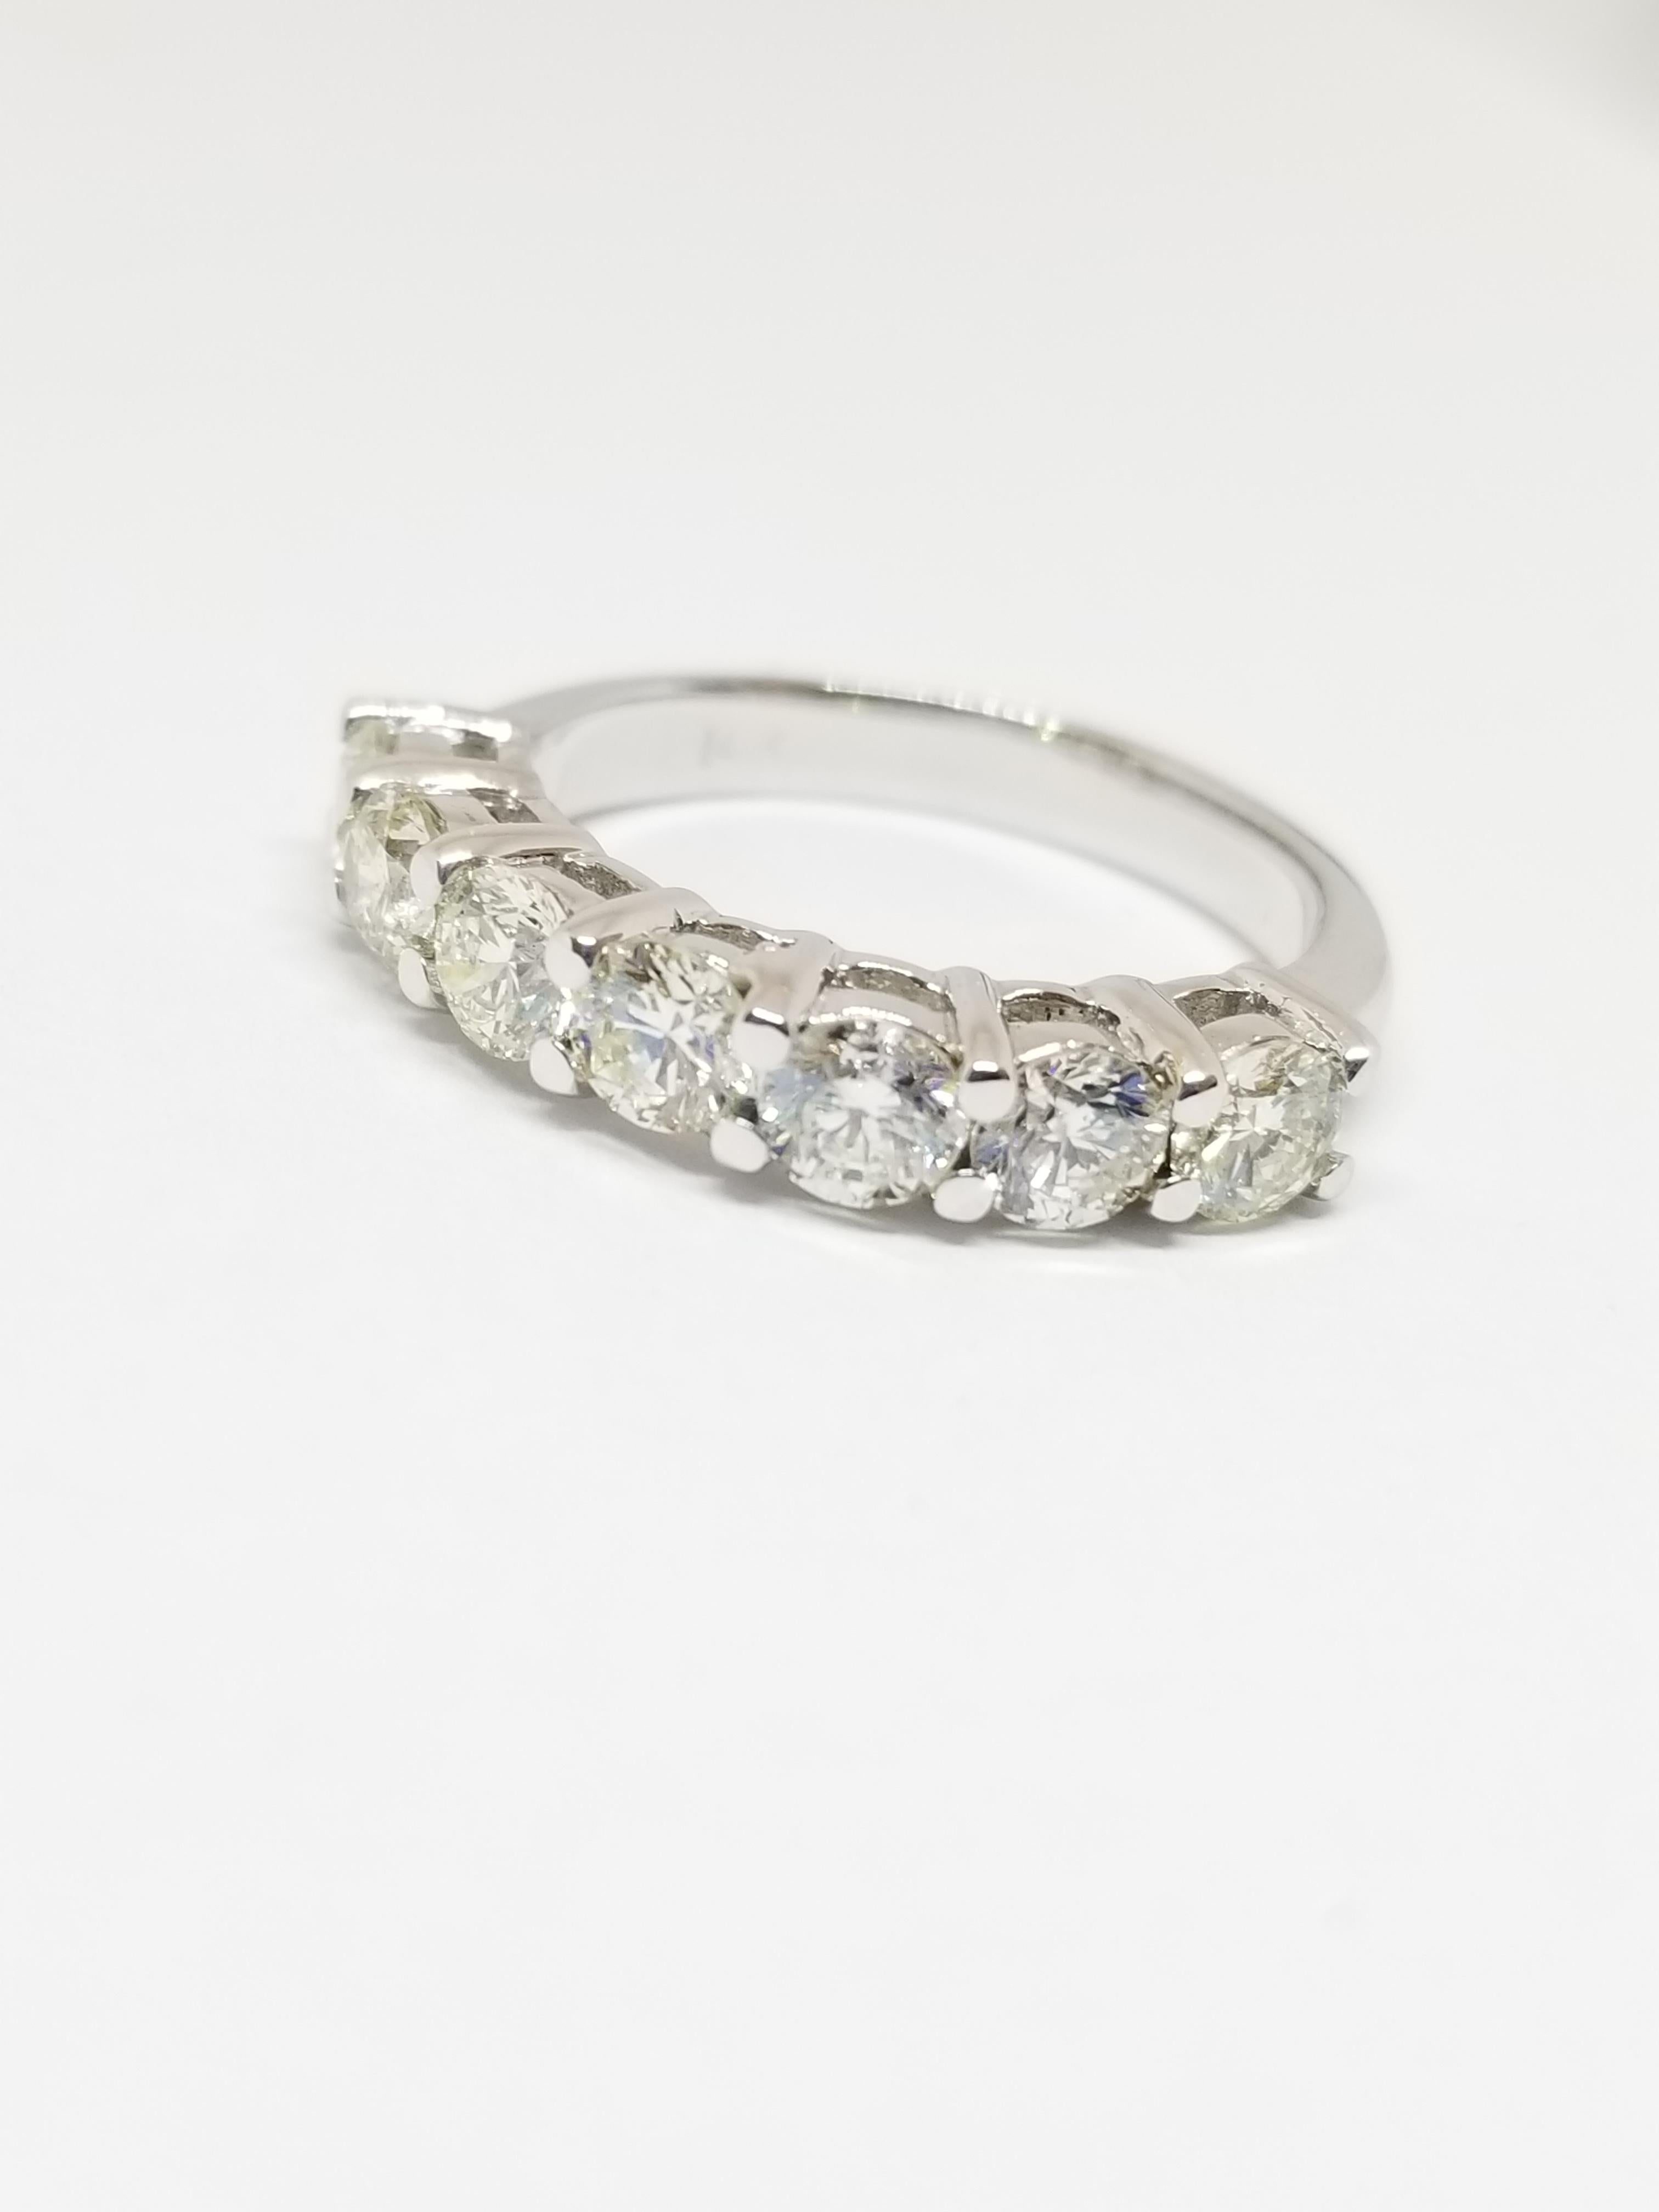 Beautiful 1.70 Carats Diamond half Band has 7 Pieces of very shiny H-I Color VS-SI Clarity diamonds.

Ring Size 7